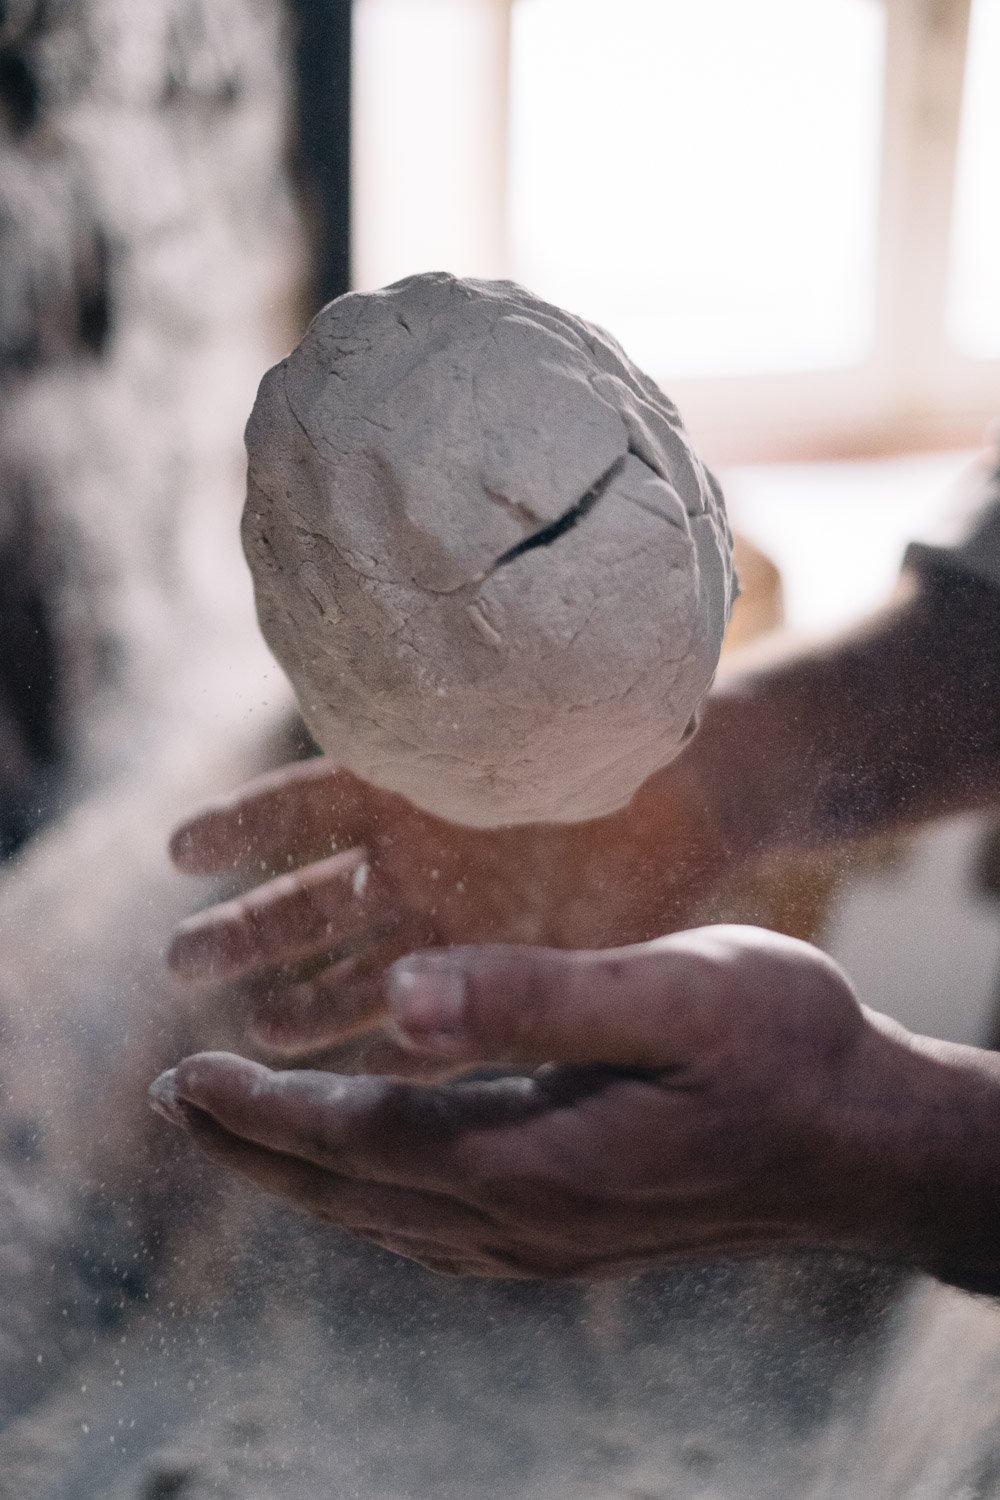 Serra da Estrela - Manteigas - Making Bread in a stone oven